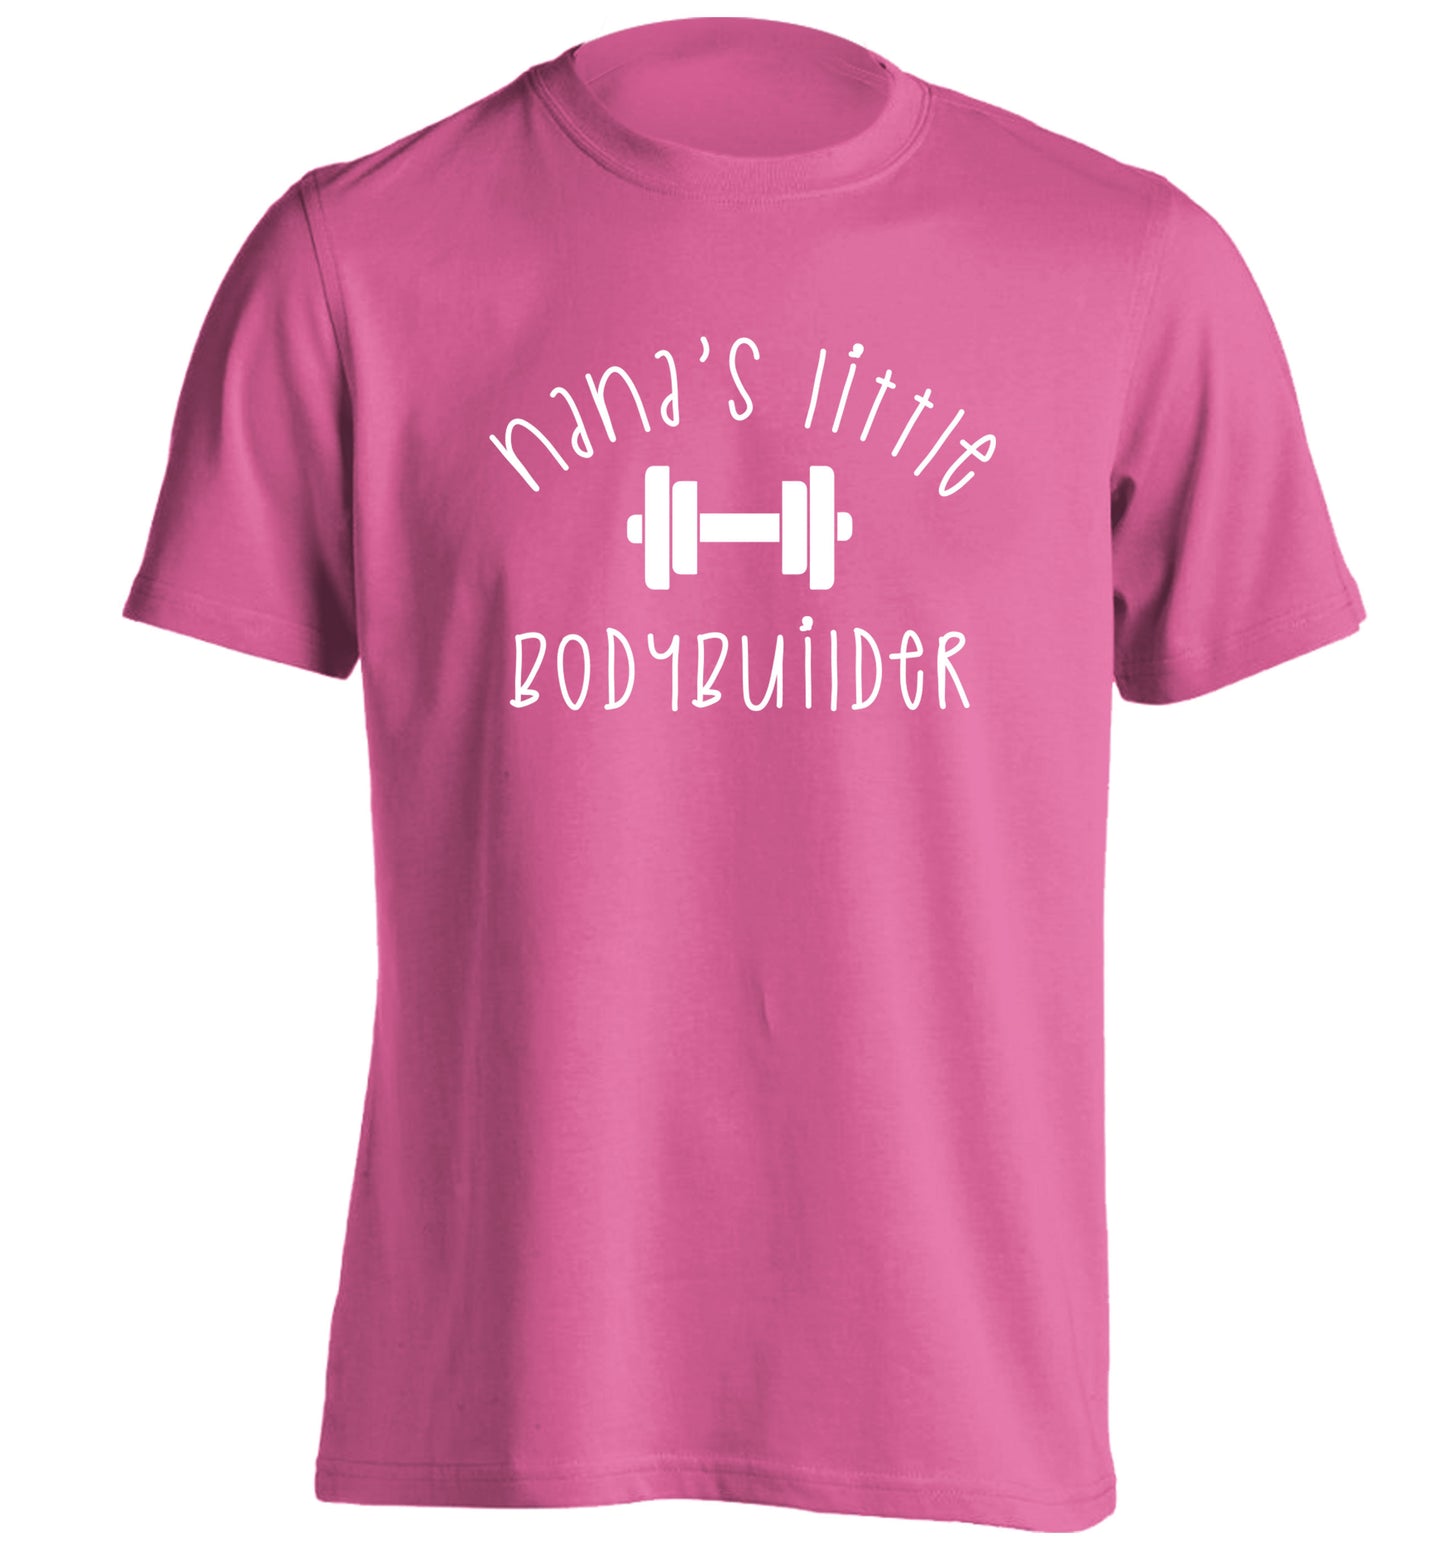 Nana's little bodybuilder adults unisex pink Tshirt 2XL